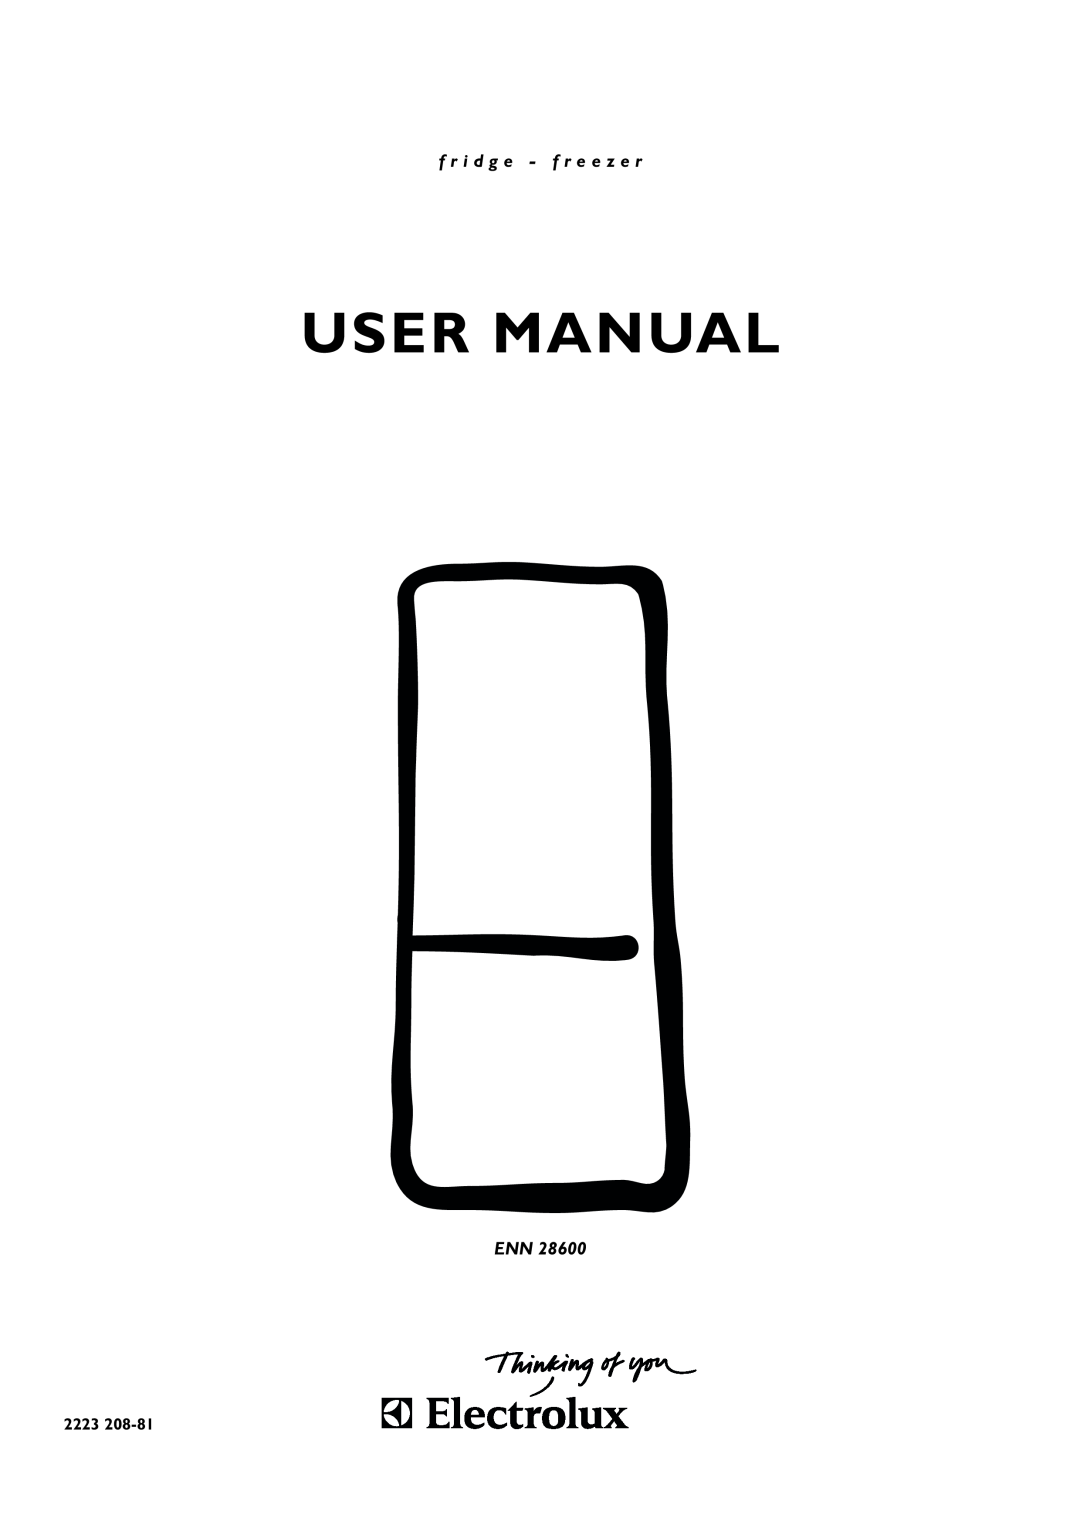 Electrolux 2223 208-81 user manual User Manual, f r i d g e - f r e e z e r 